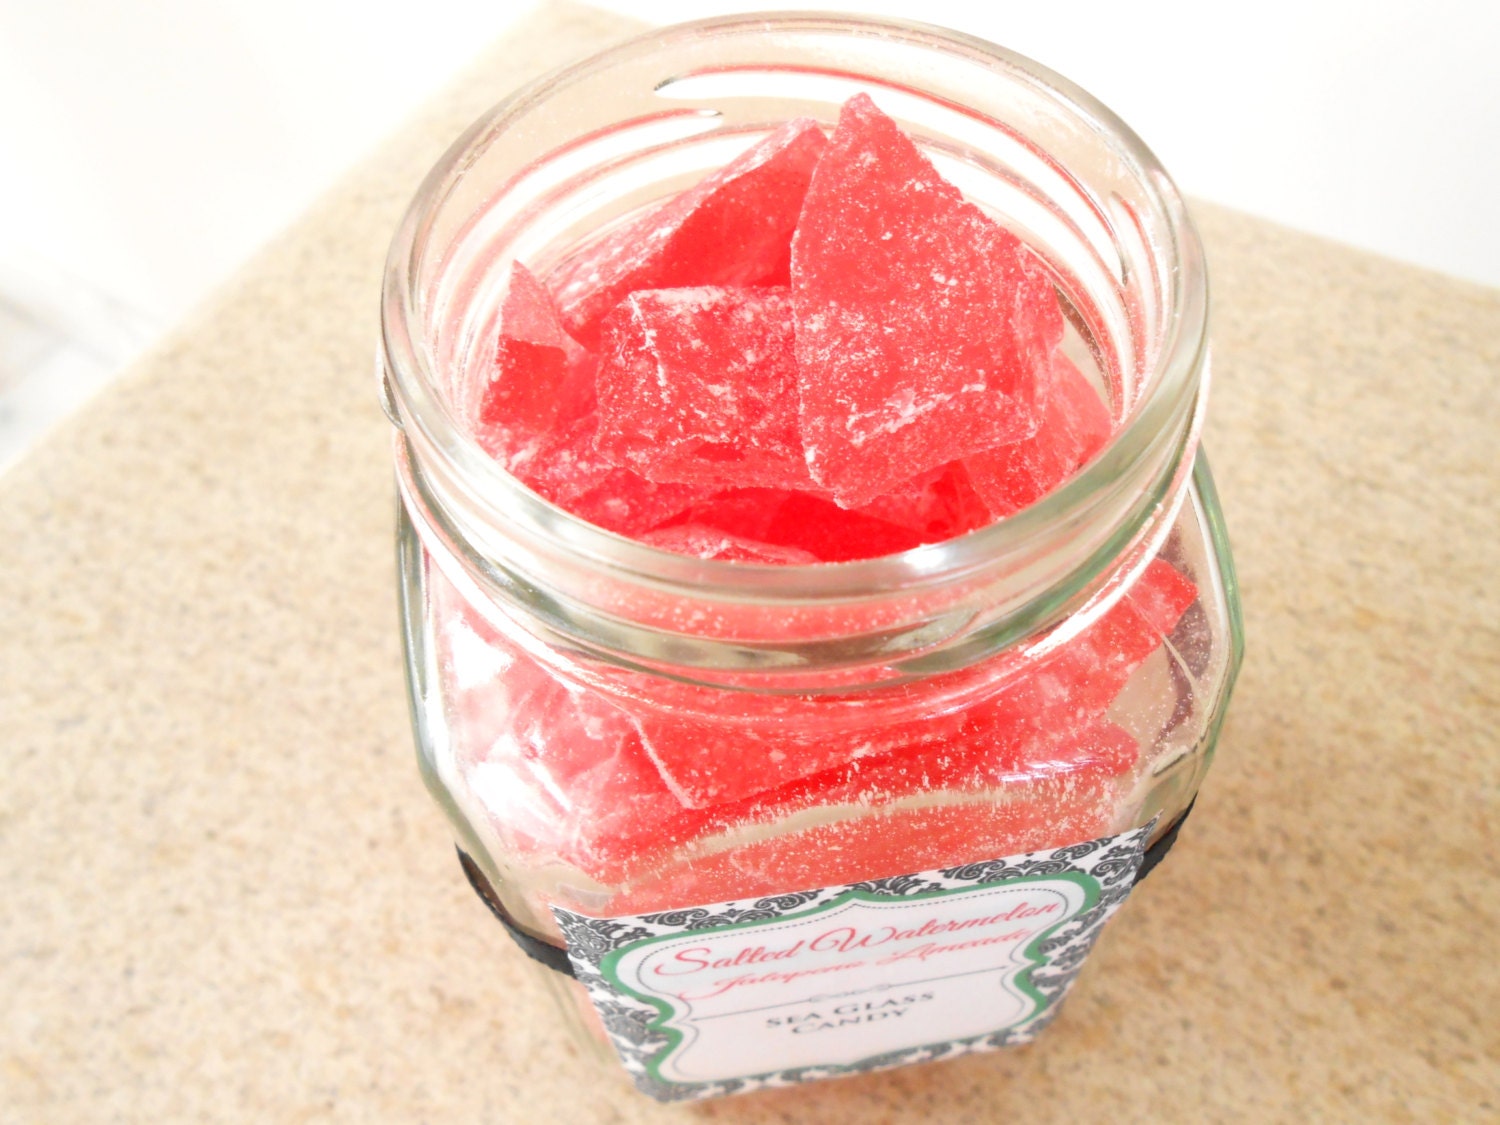 Salted Watermelon Jalapeno Limeade Sea Glass Candy in a Jar - Half-Pint - Summer Party Favors - BOSSGirlsInc